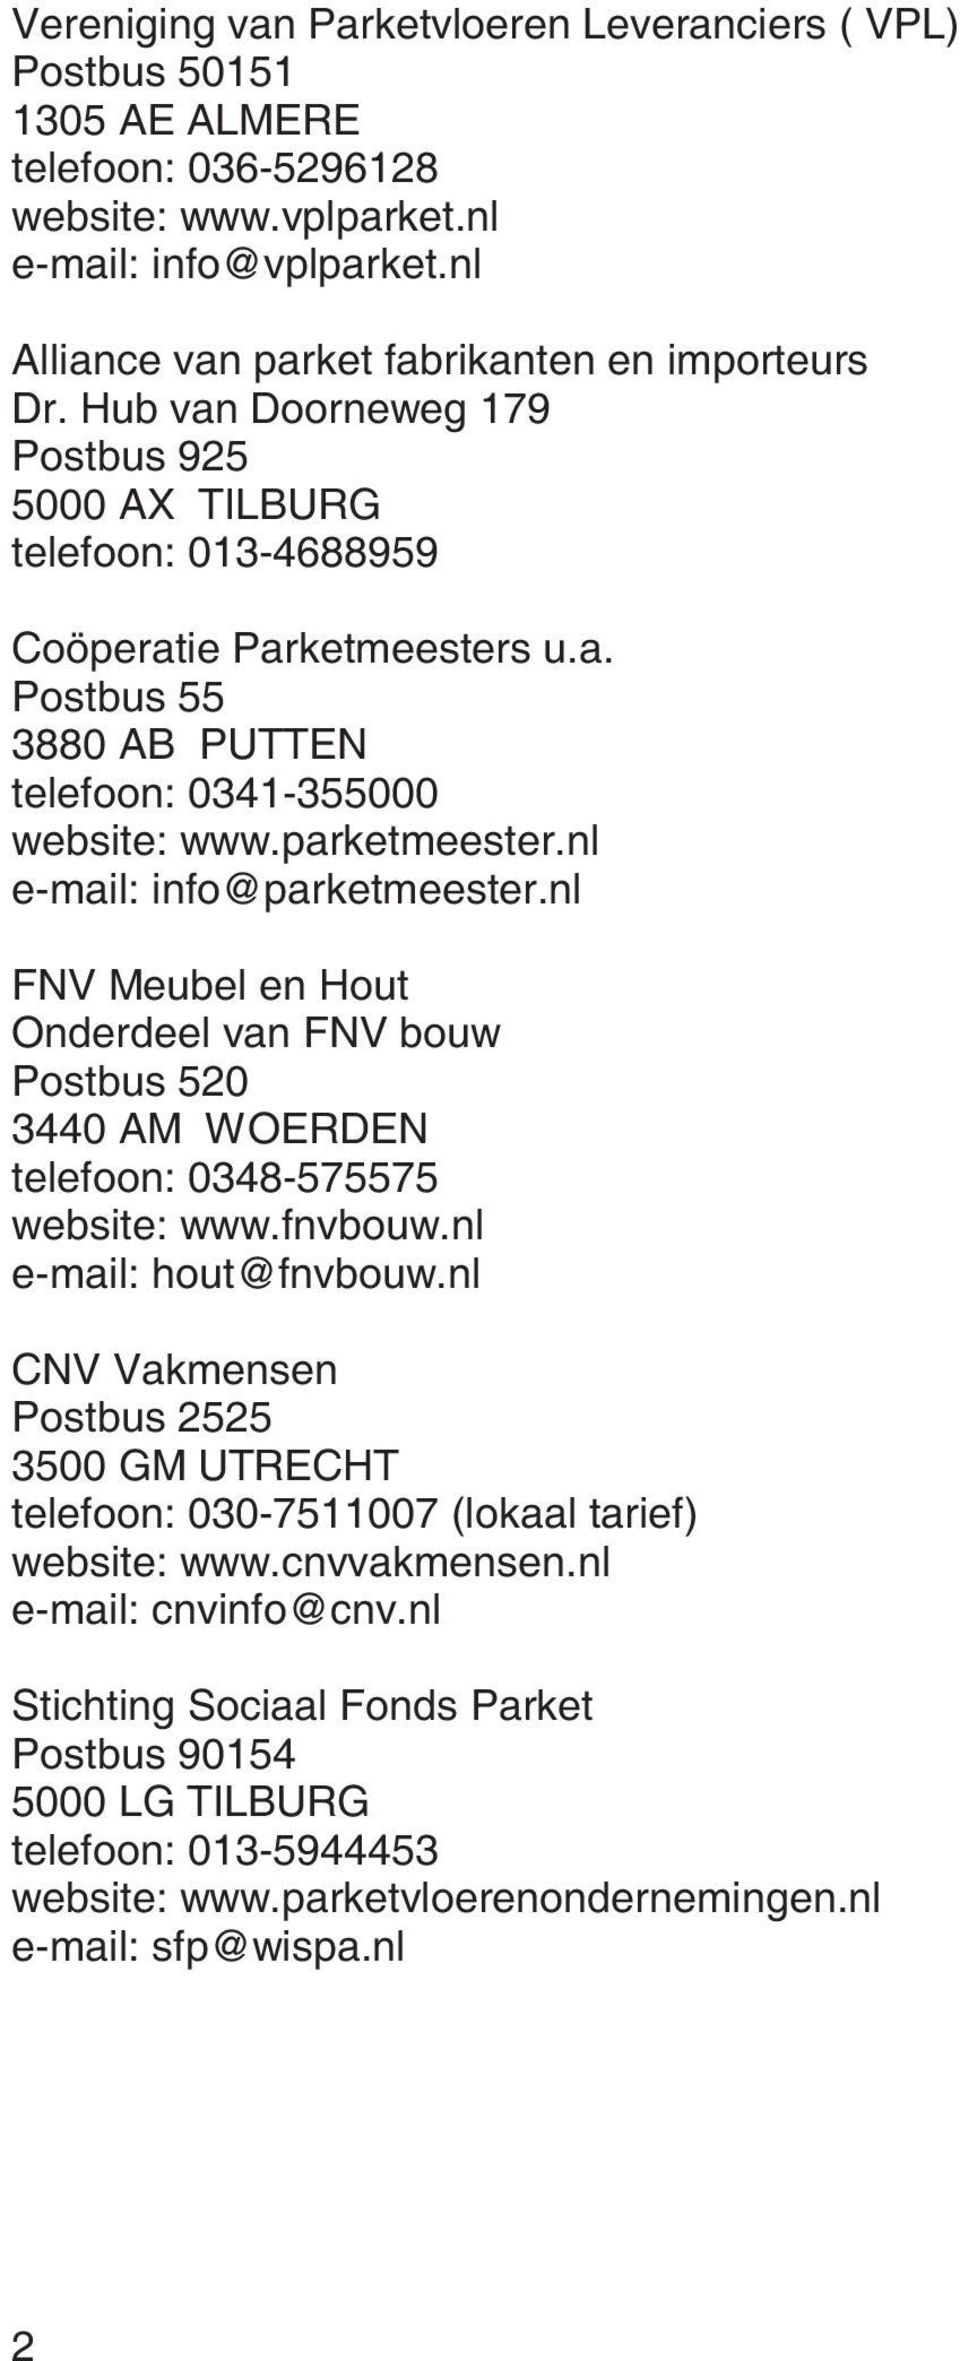 parketmeester.nl e-mail: info@parketmeester.nl FNV Meubel en Hout Onderdeel van FNV bouw Postbus 520 3440 AM WOERDEN telefoon: 0348-575575 website: www.fnvbouw.nl e-mail: hout@fnvbouw.